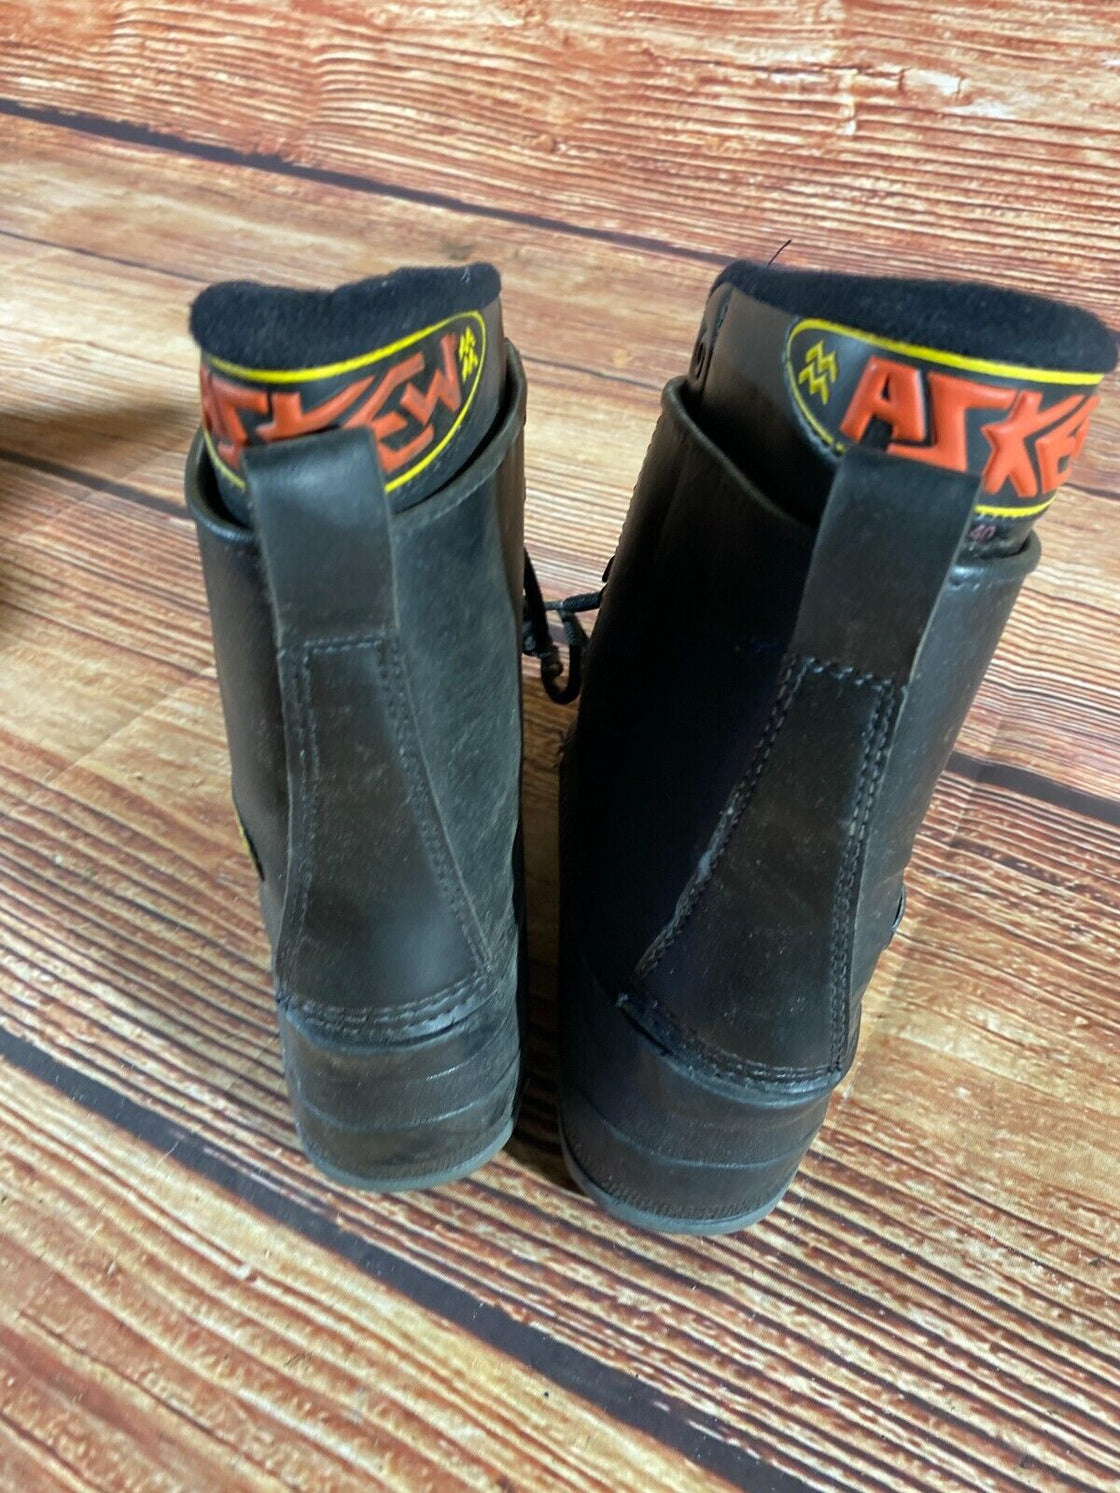 ESKEW Vintage Snowboard Boots Size EU40, US8, UK7, Mondo 250 mm